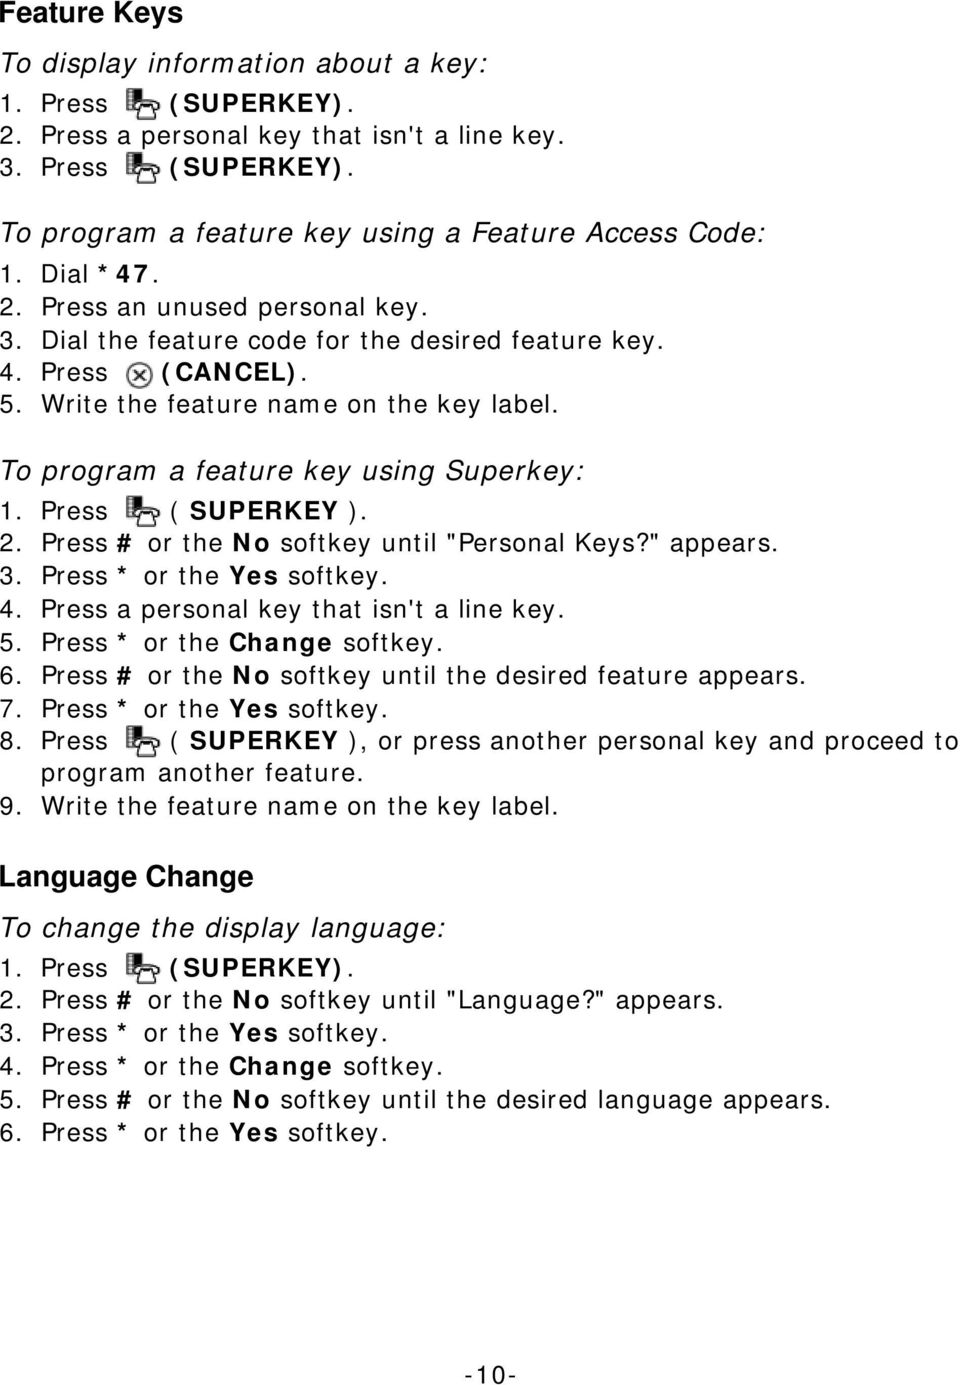 To program a feature key using Superkey: 1. Press ( SUPERKEY ). 2. Press # or the No softkey until "Personal Keys?" appears. 3. Press * or the Yes softkey. 4.